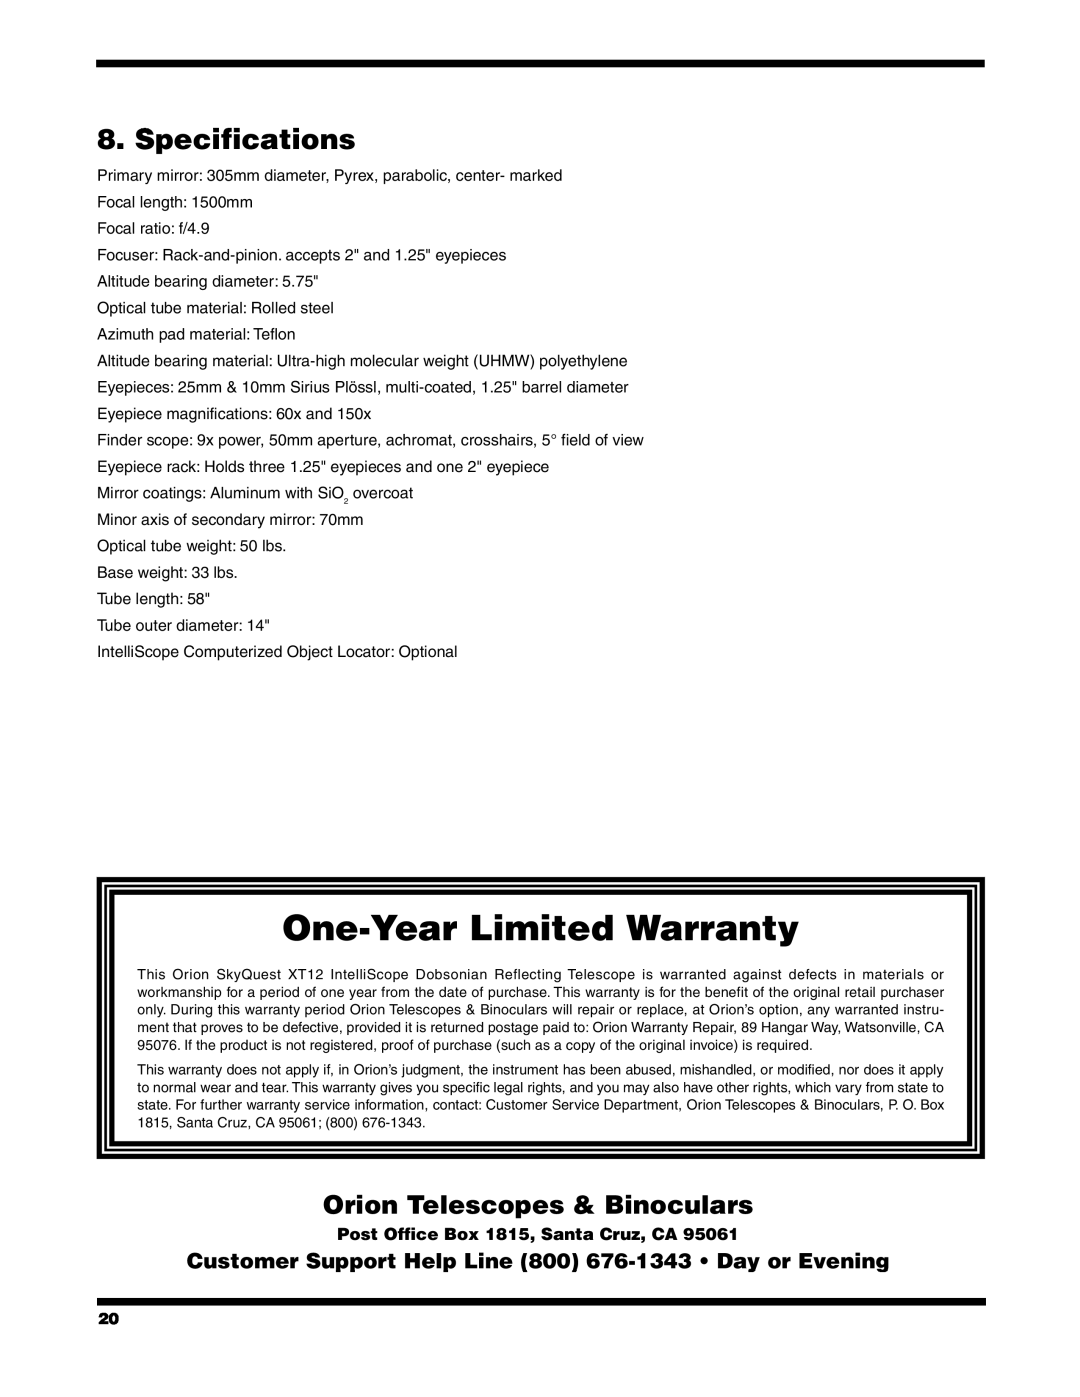 Orion XT12 Specifications, One-YearLimited Warranty, Orion Telescopes & Binoculars, Post Office Box 1815, Santa Cruz, CA 